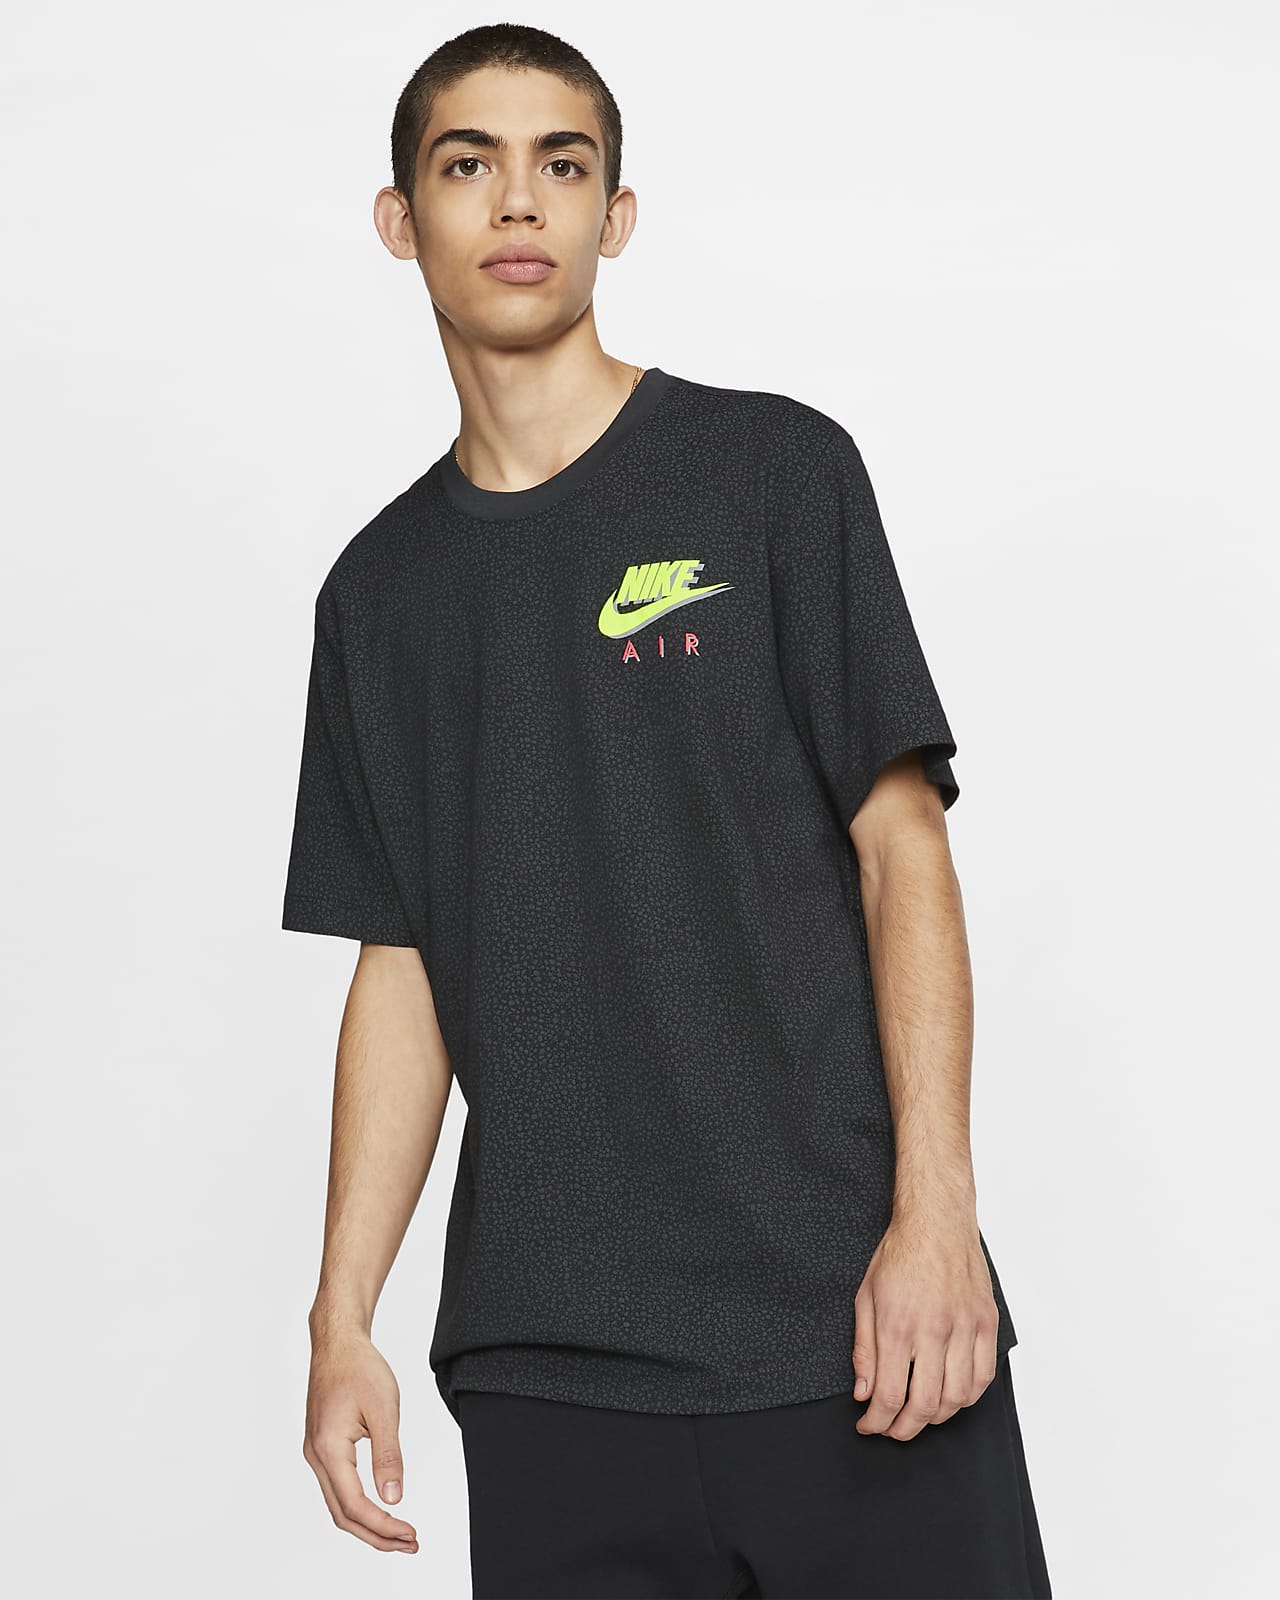 Nike Sportswear Herren-T-Shirt mit Print